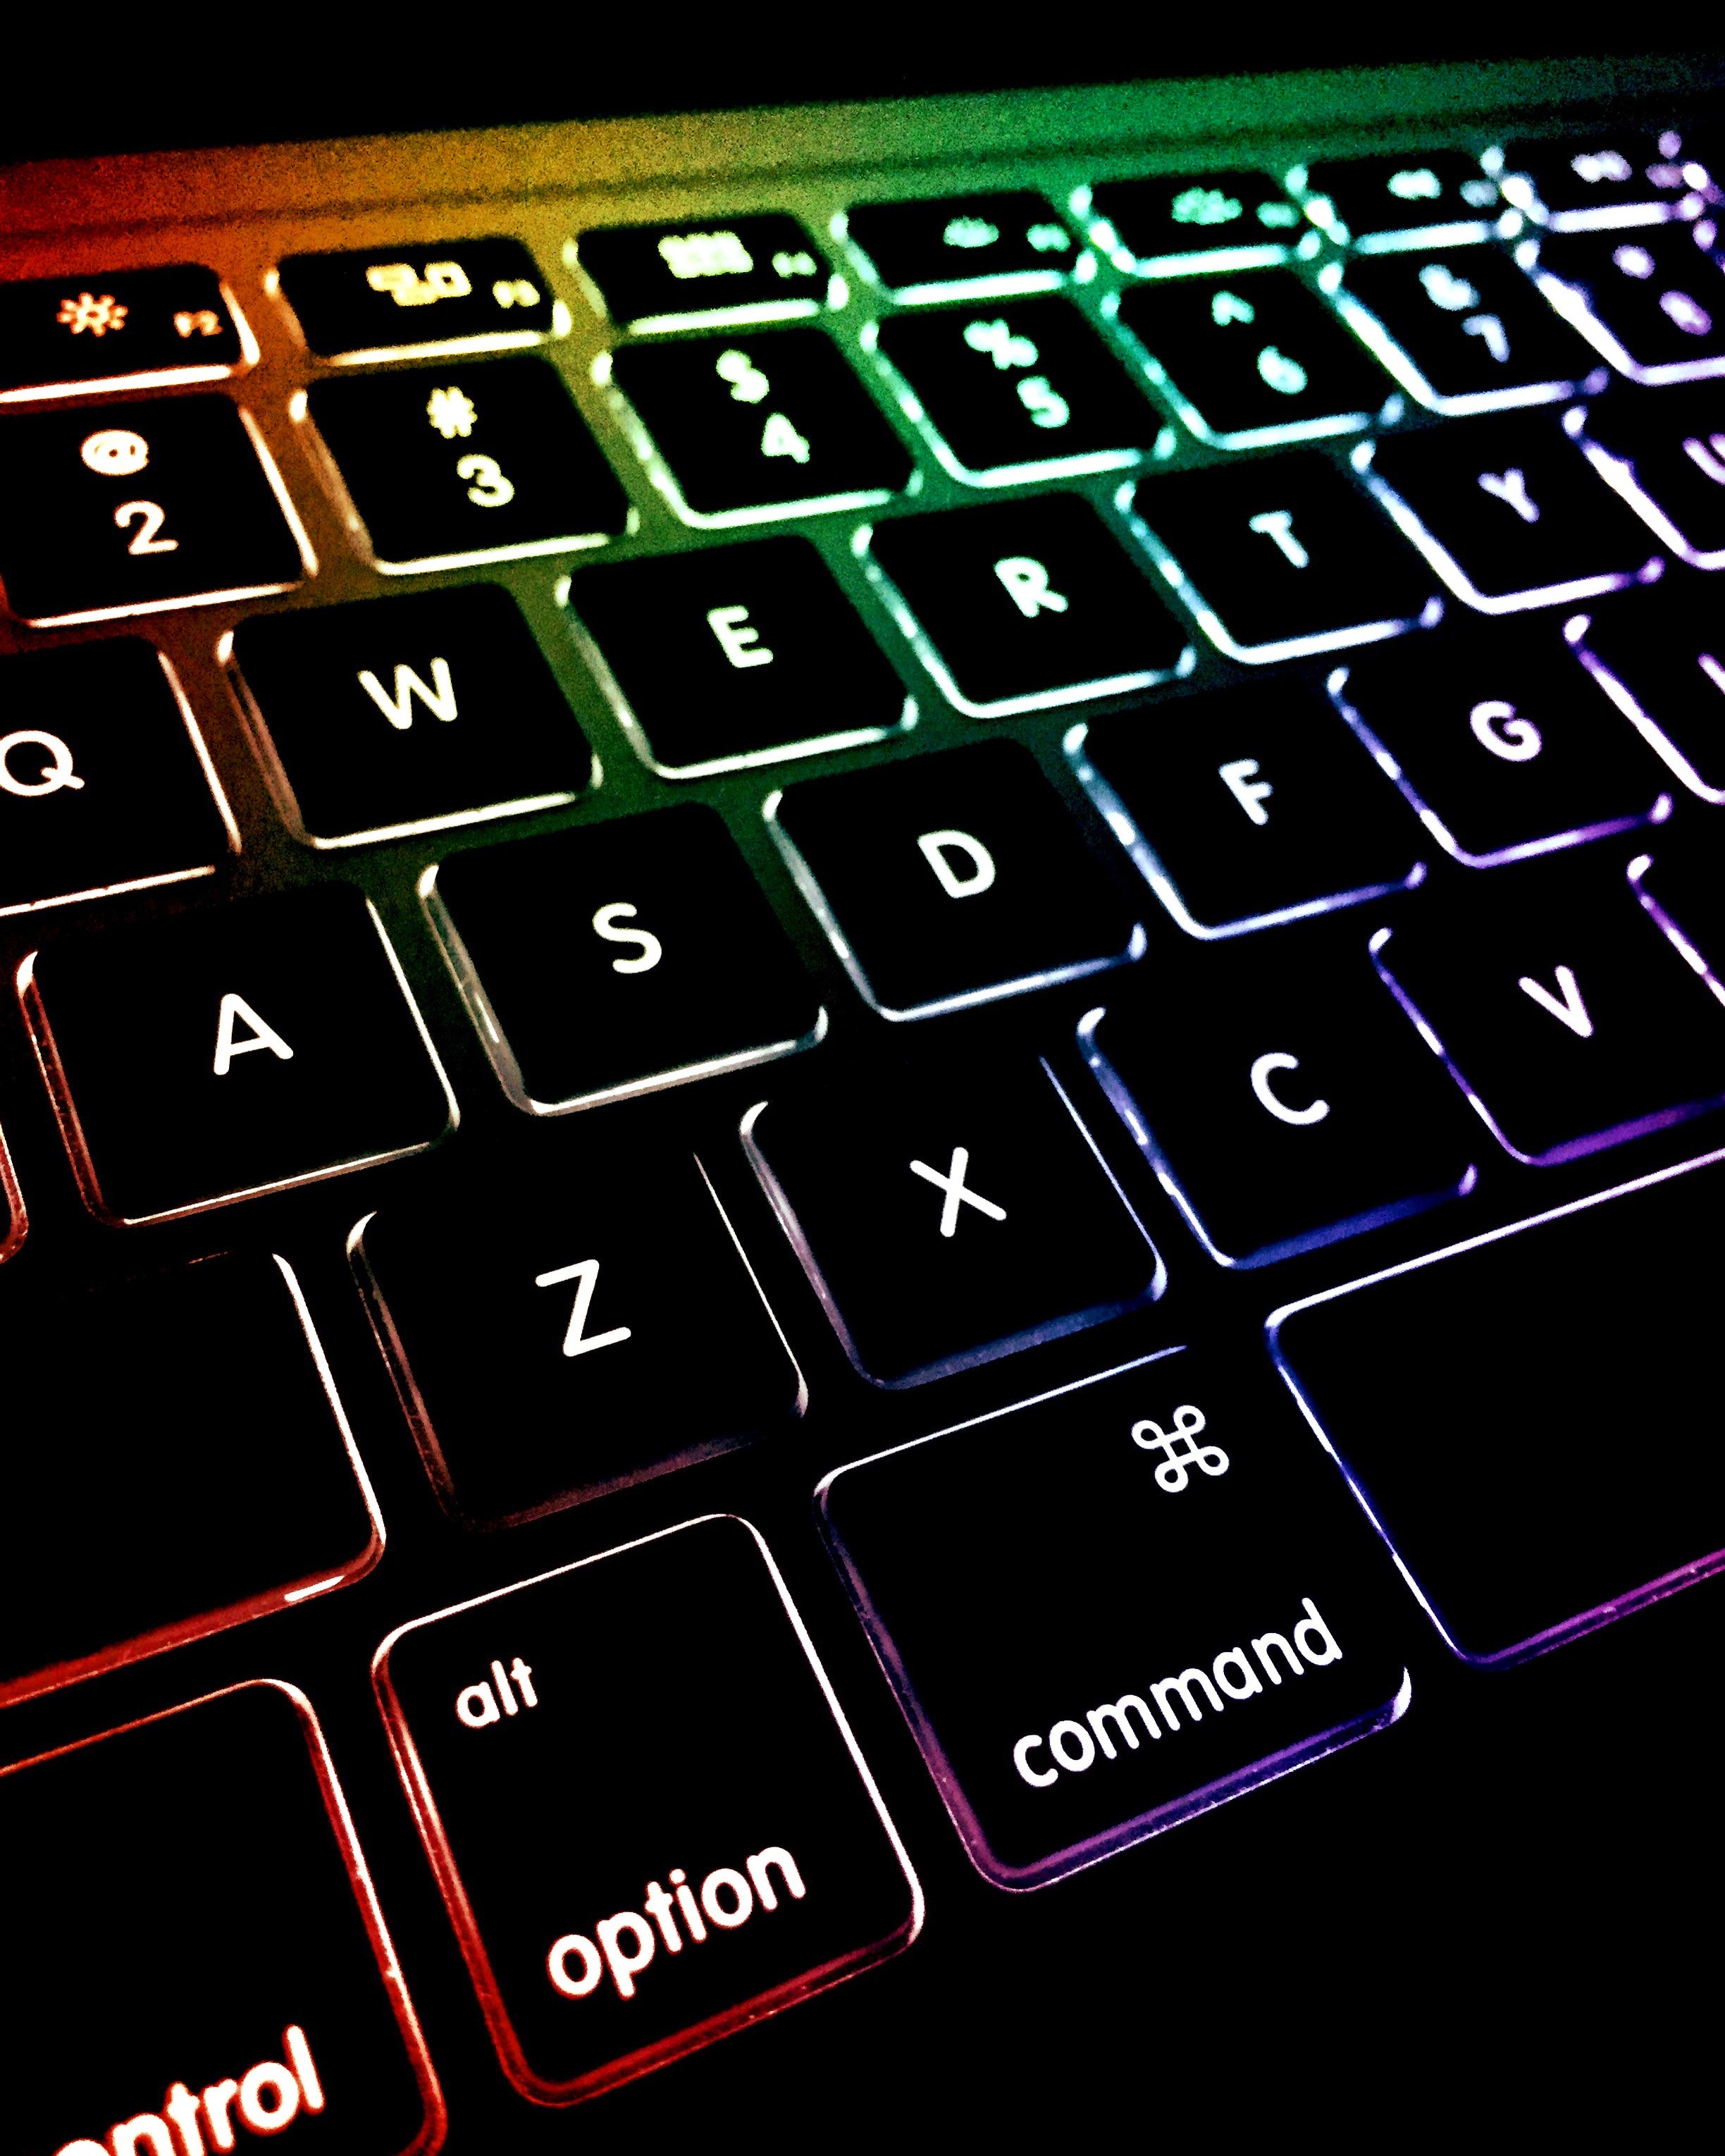 photo of lighted Apple MacBook keyboard